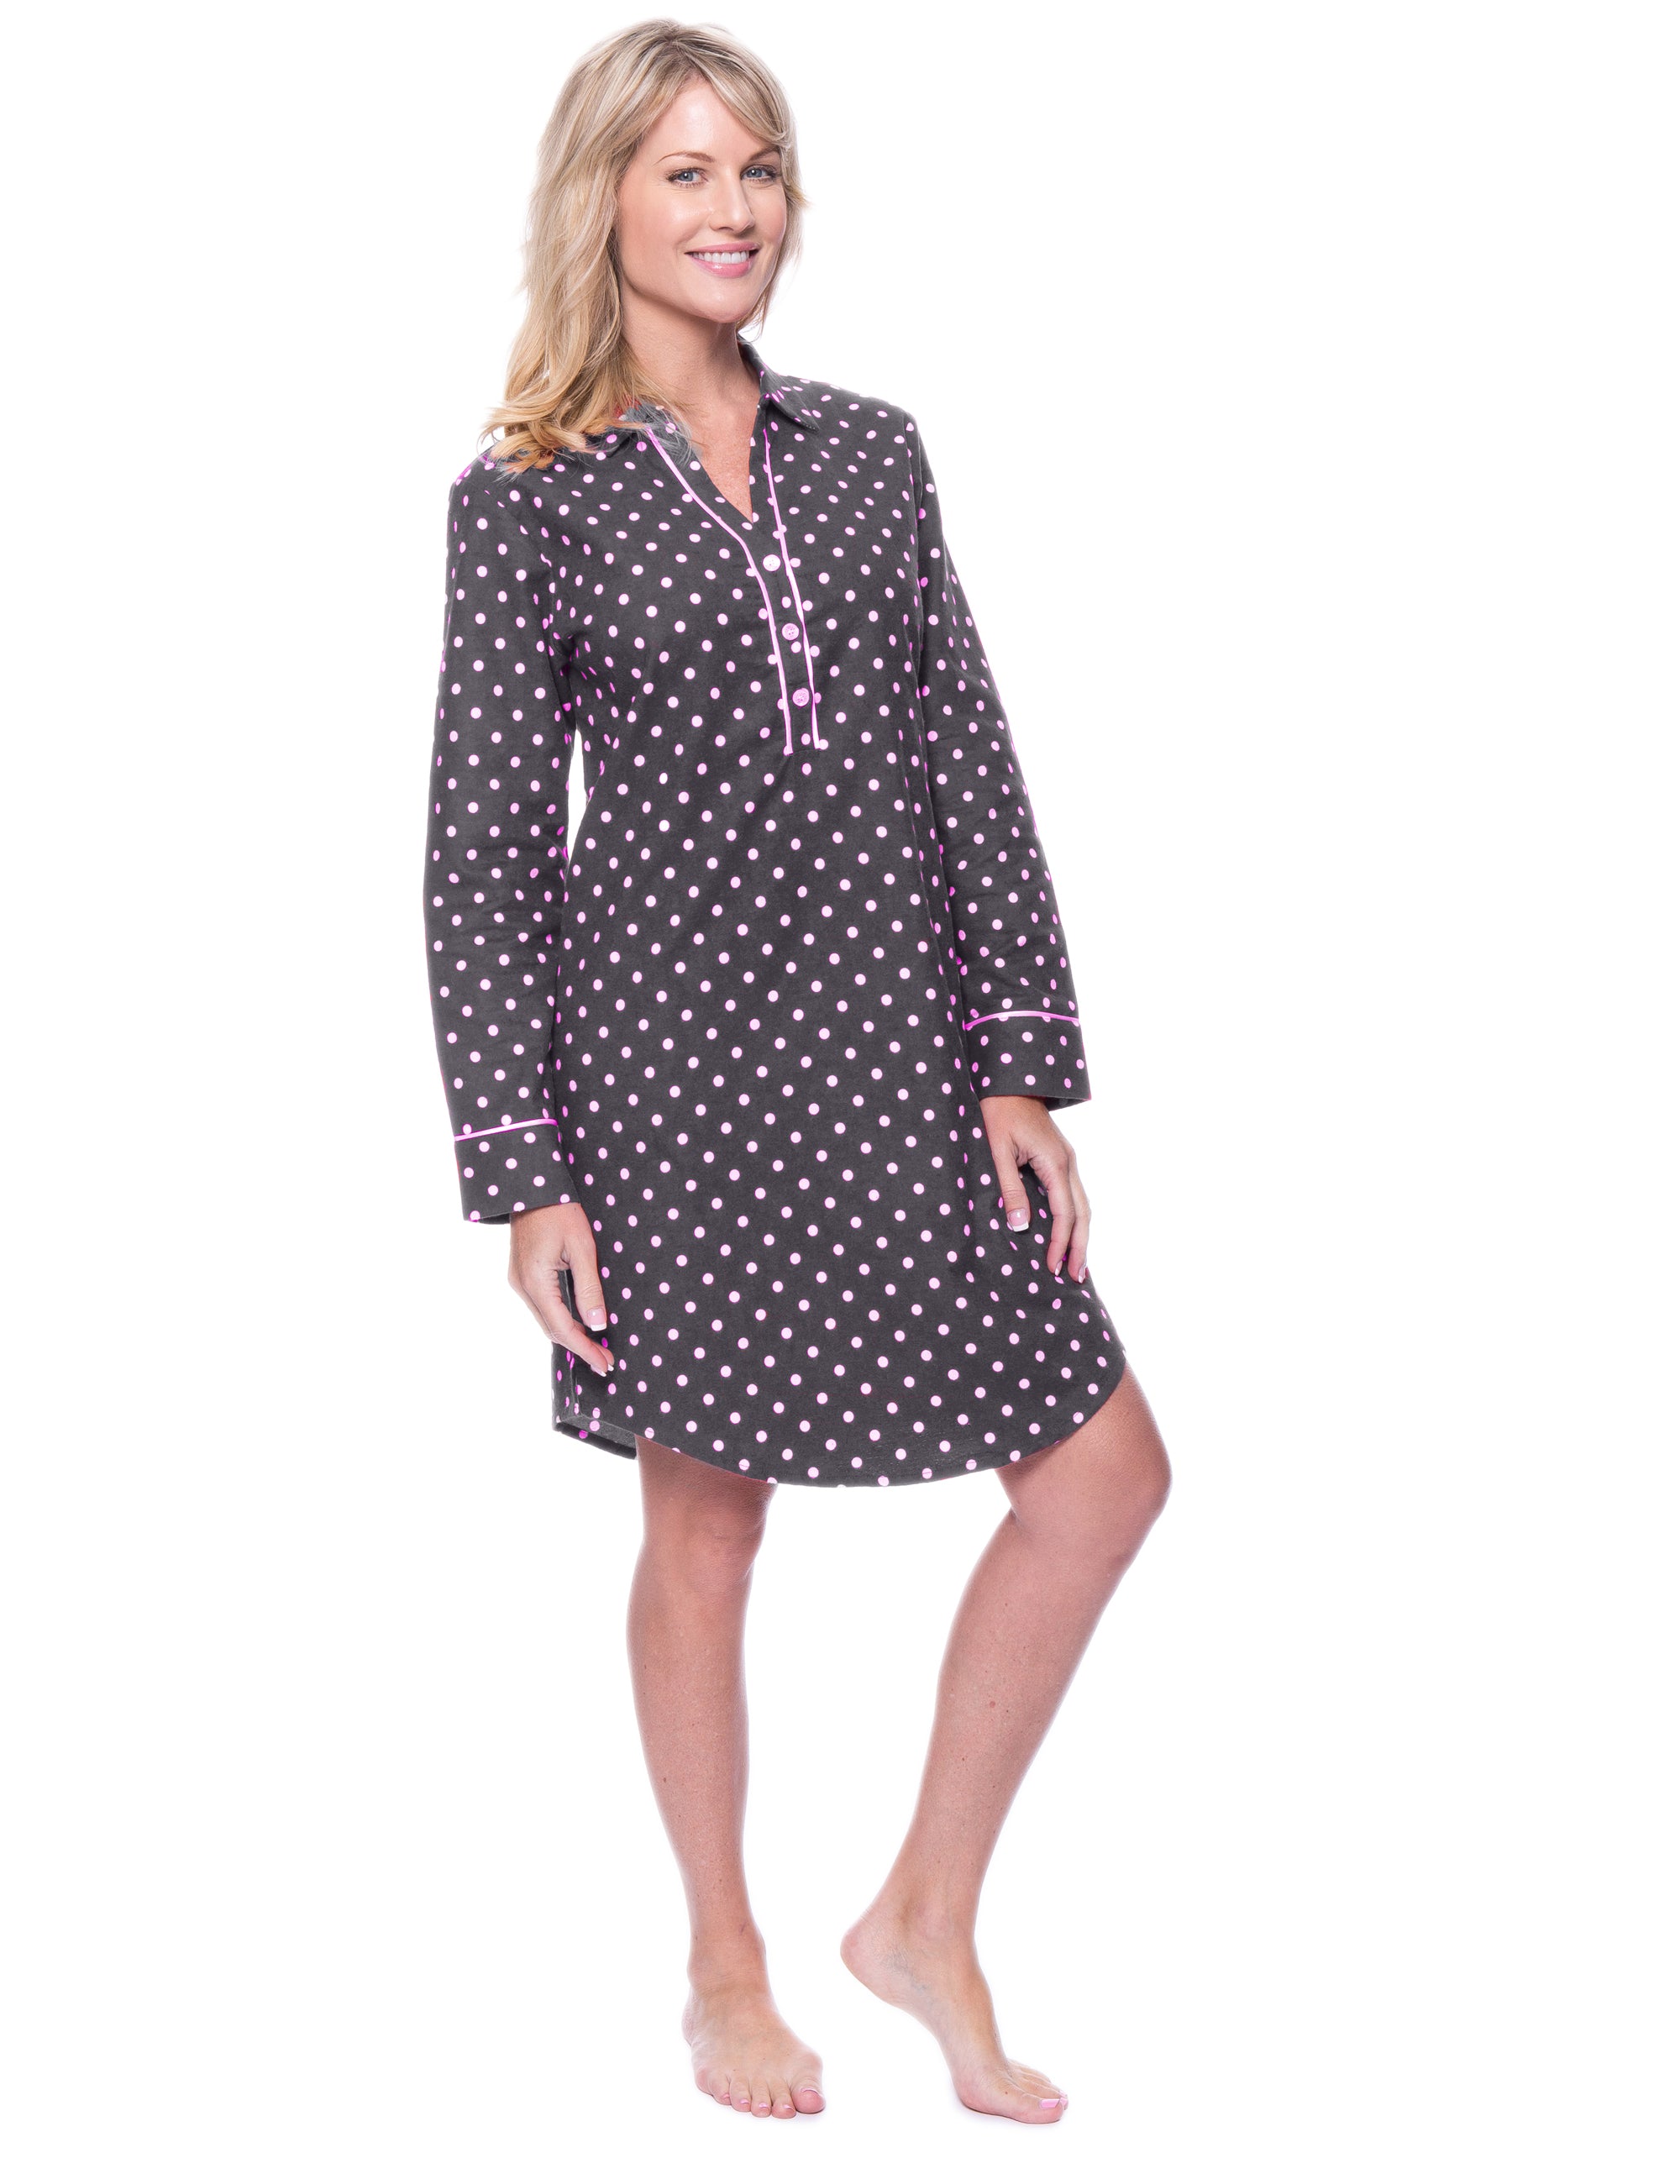 Noble Mount Womens Premium 100% Cotton Flannel Long Sleeve Sleep Shirt - Dots Diva Gray-Pink